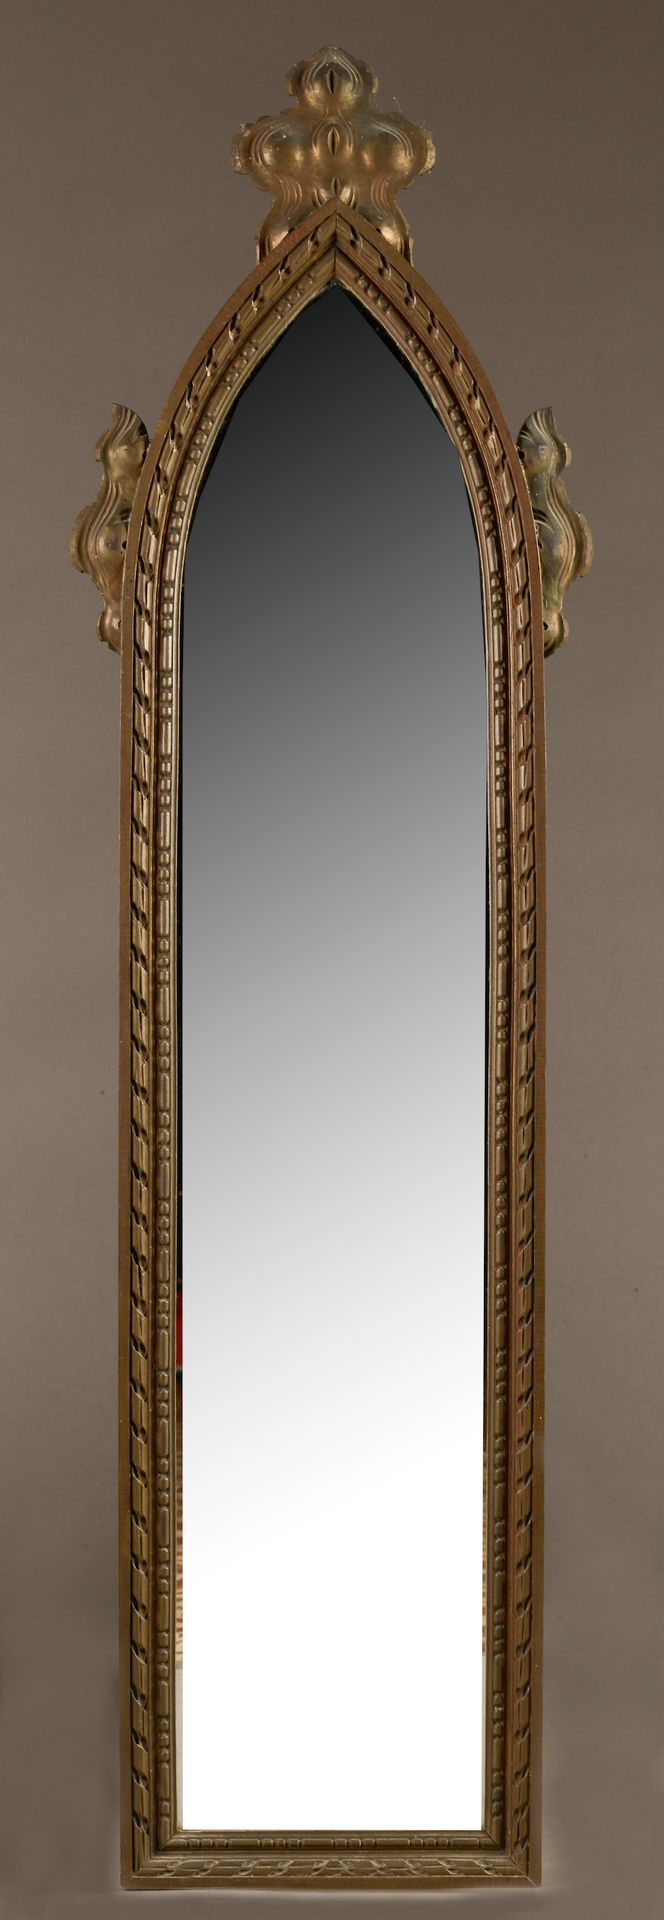 Null 木制镜子和镀金构图，采用大型哥特式拱廊的形式，顶部有芙蓉花。

新哥特式时期。

身高：133厘米133 cm - 宽度 : 37 cm